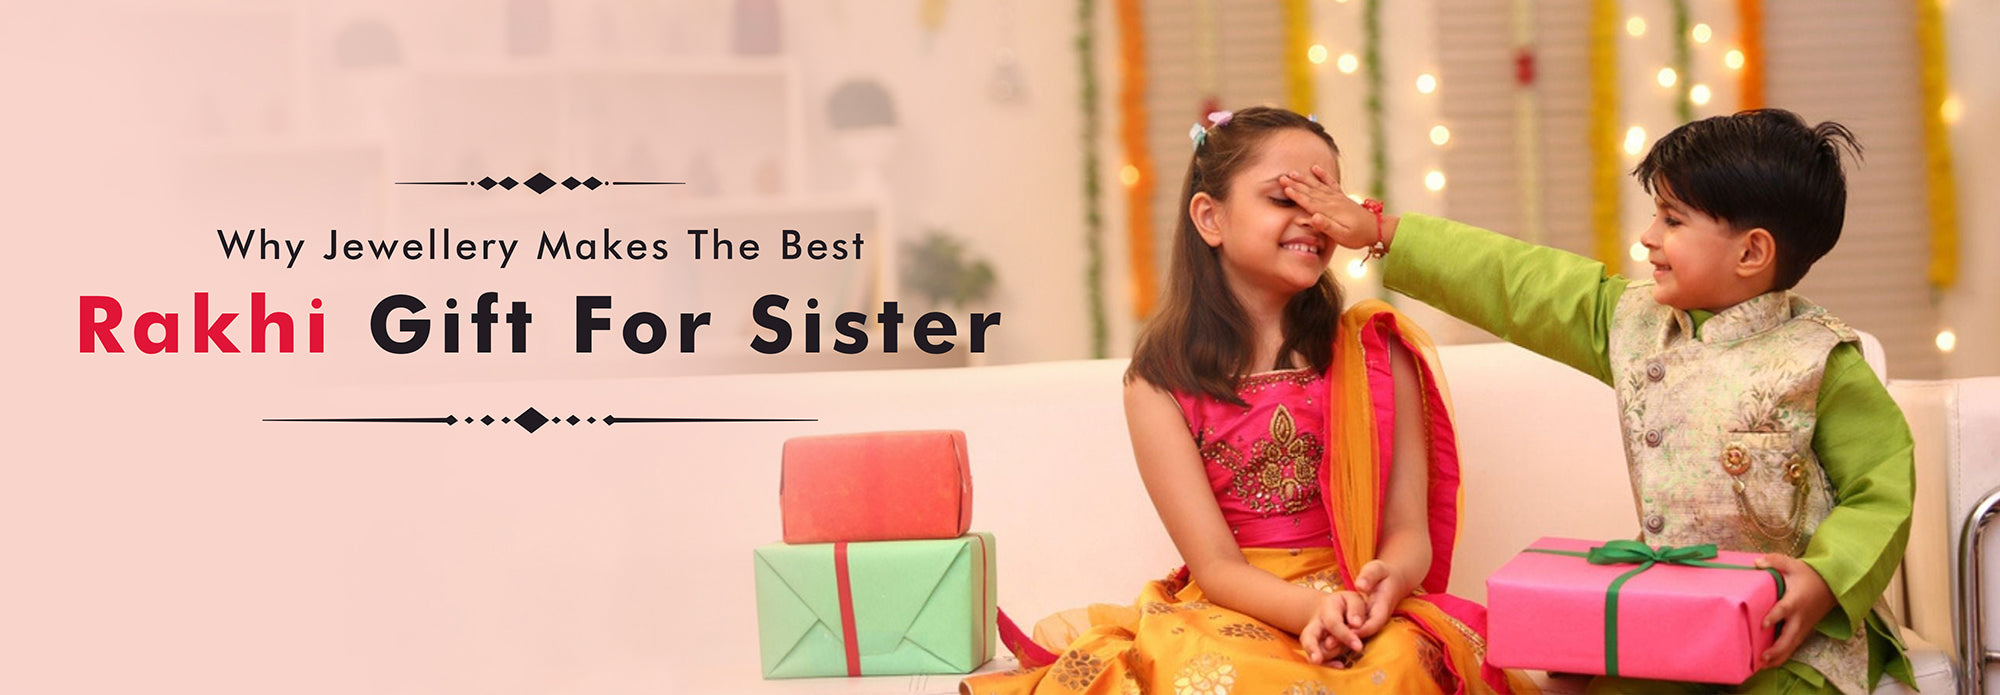 Why Jewellery makes the best rakhi Gift for Sister?